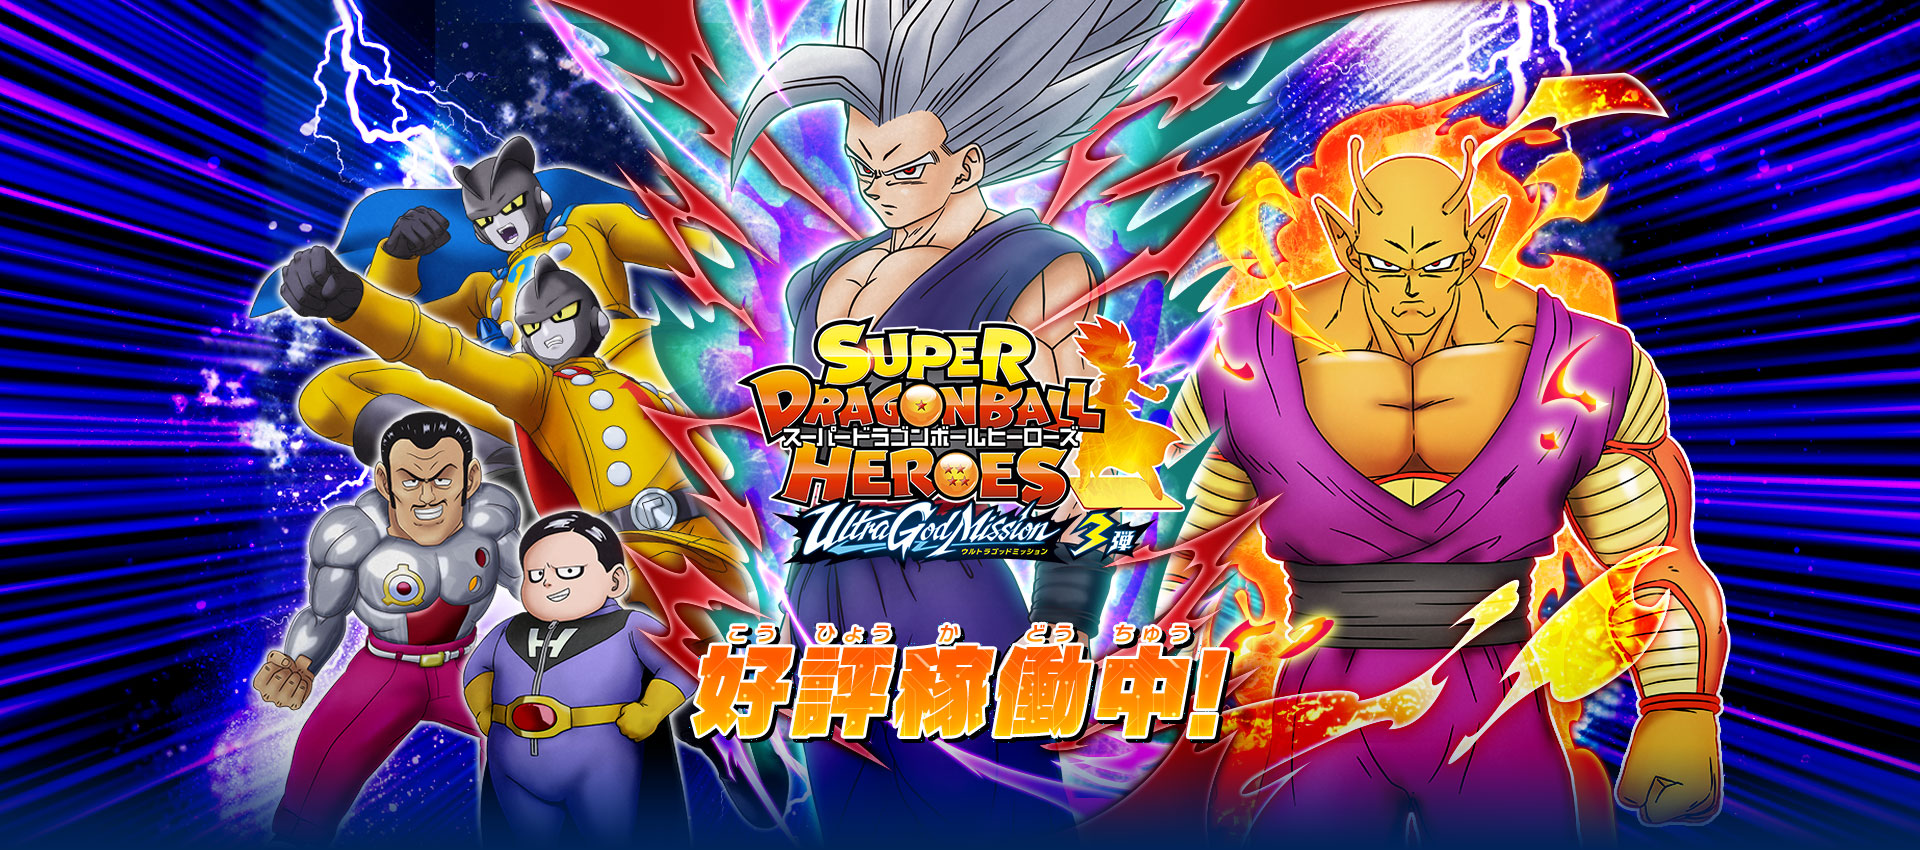 Super Dragon Ball Heroes Ultra God Mission SUPER DRAGON BALL HEROES ULTRA GOD MISSION 3 (SDBH UGM3) cards list